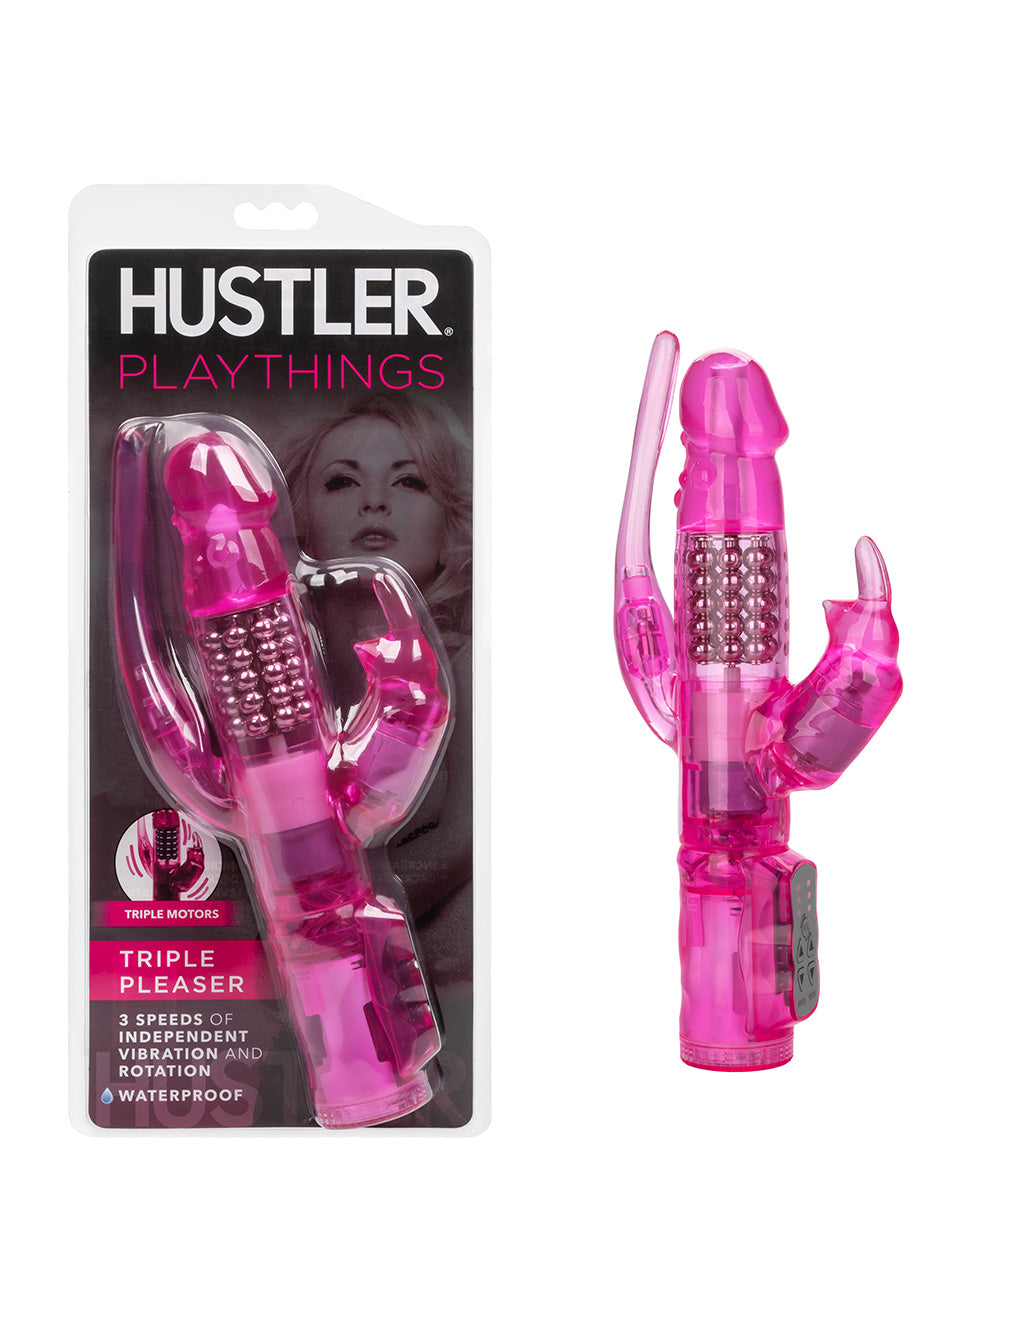 Hustler® Playthings Triple Pleaser Vibrator- With package